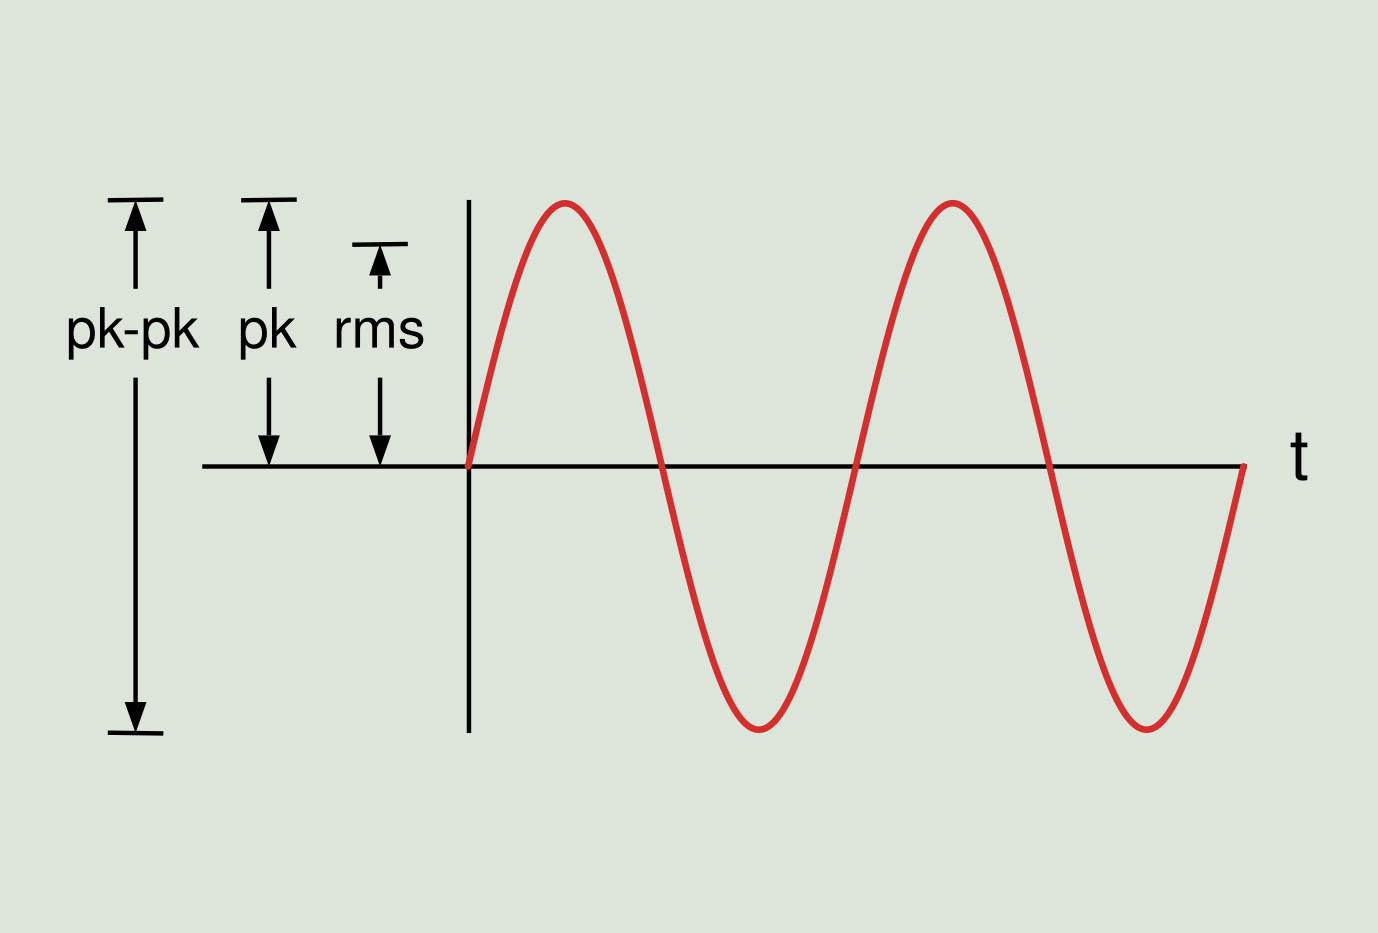 Figure 2.3: Waveform amplitude measurements